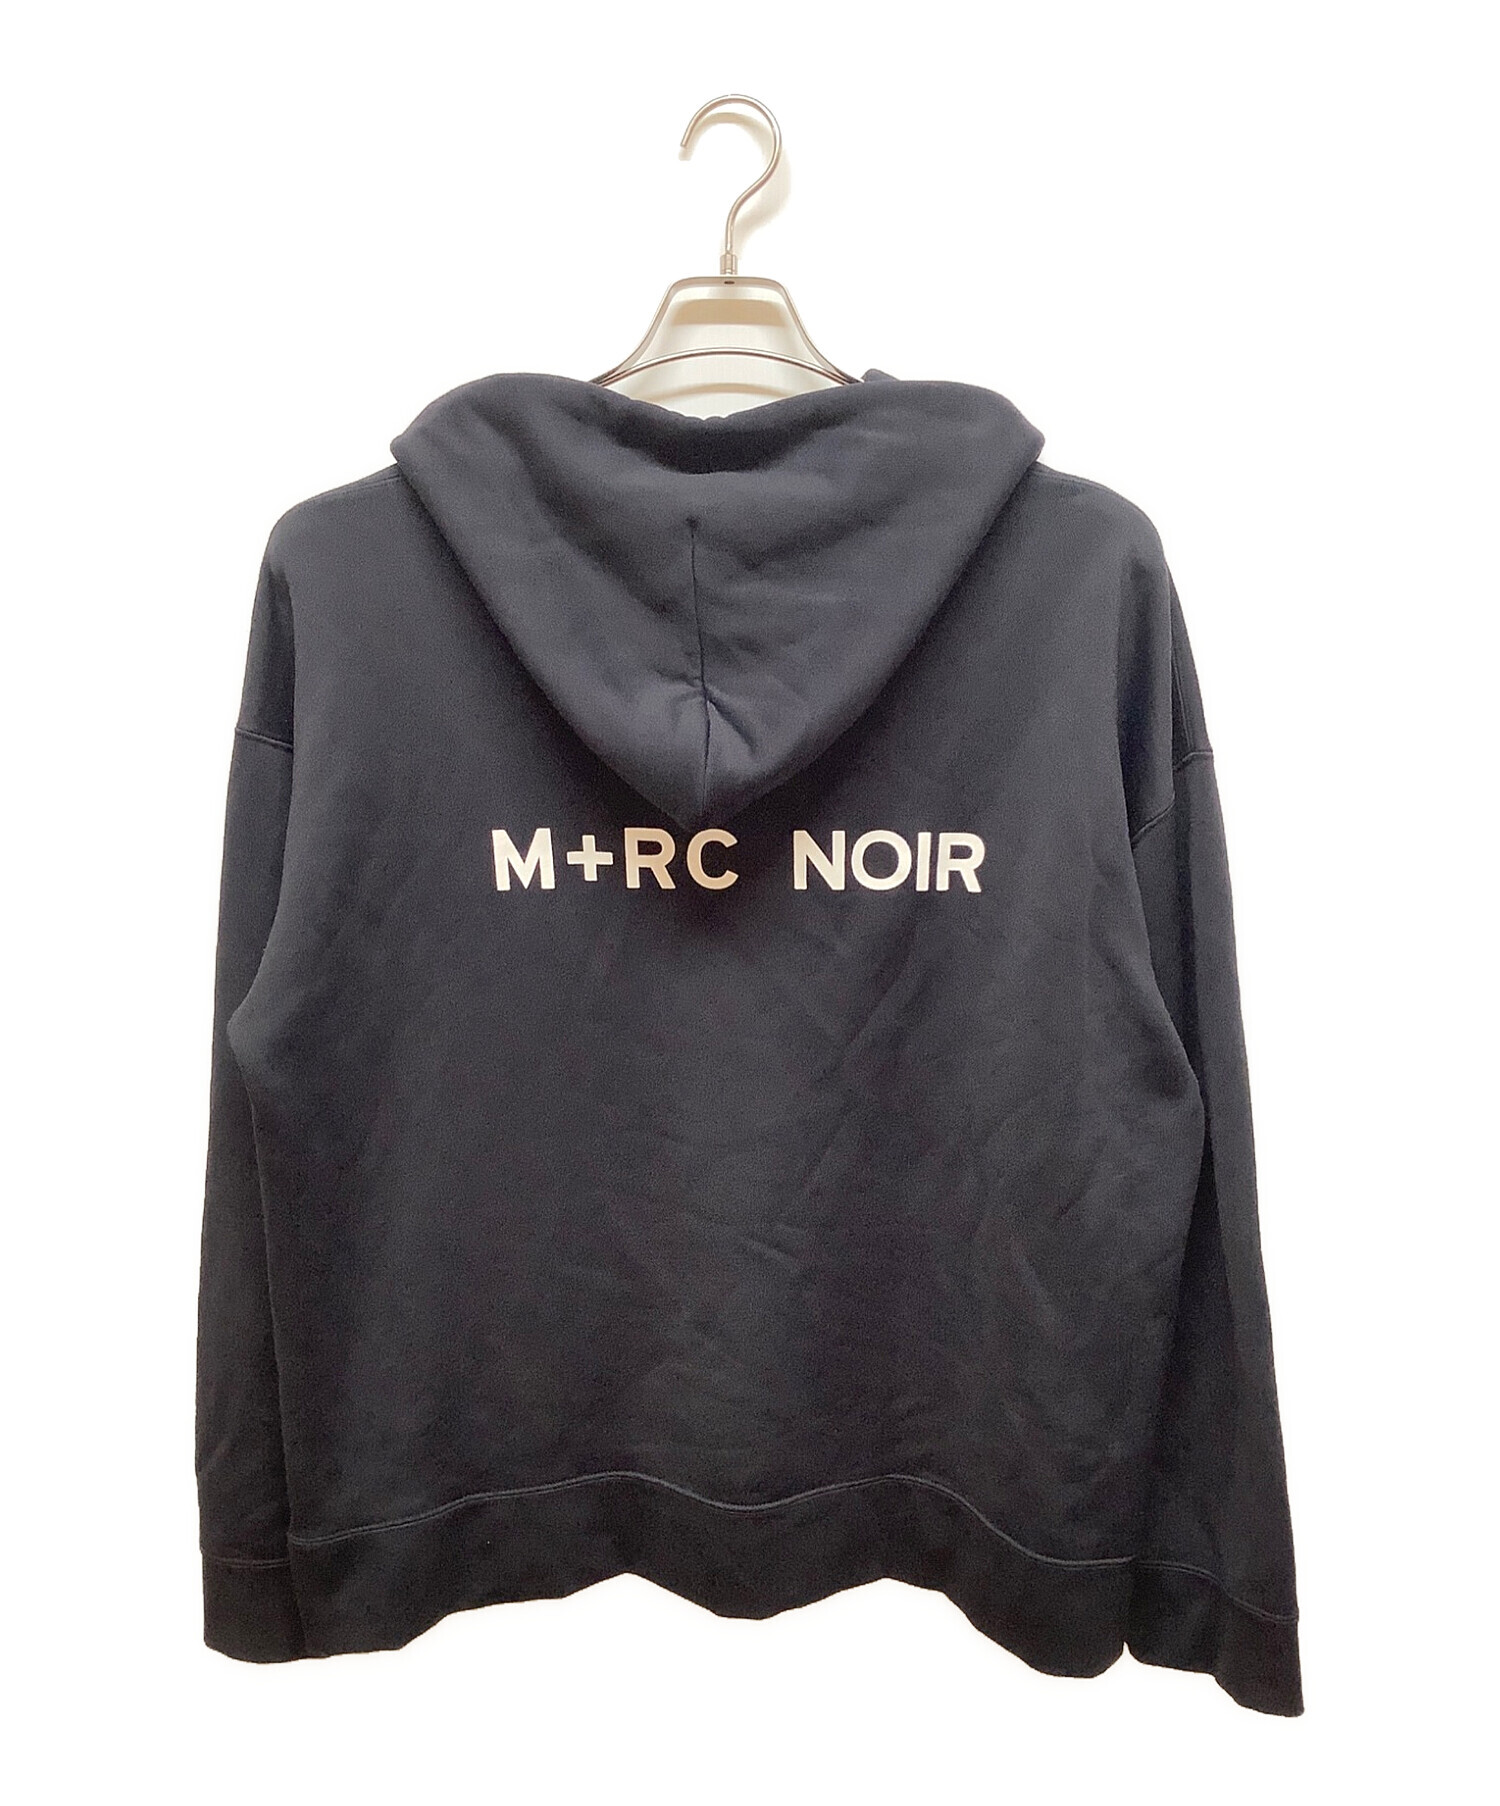 M+RC NOIR (マルシェノア) プルオーバーパーカー ブラック サイズ:M